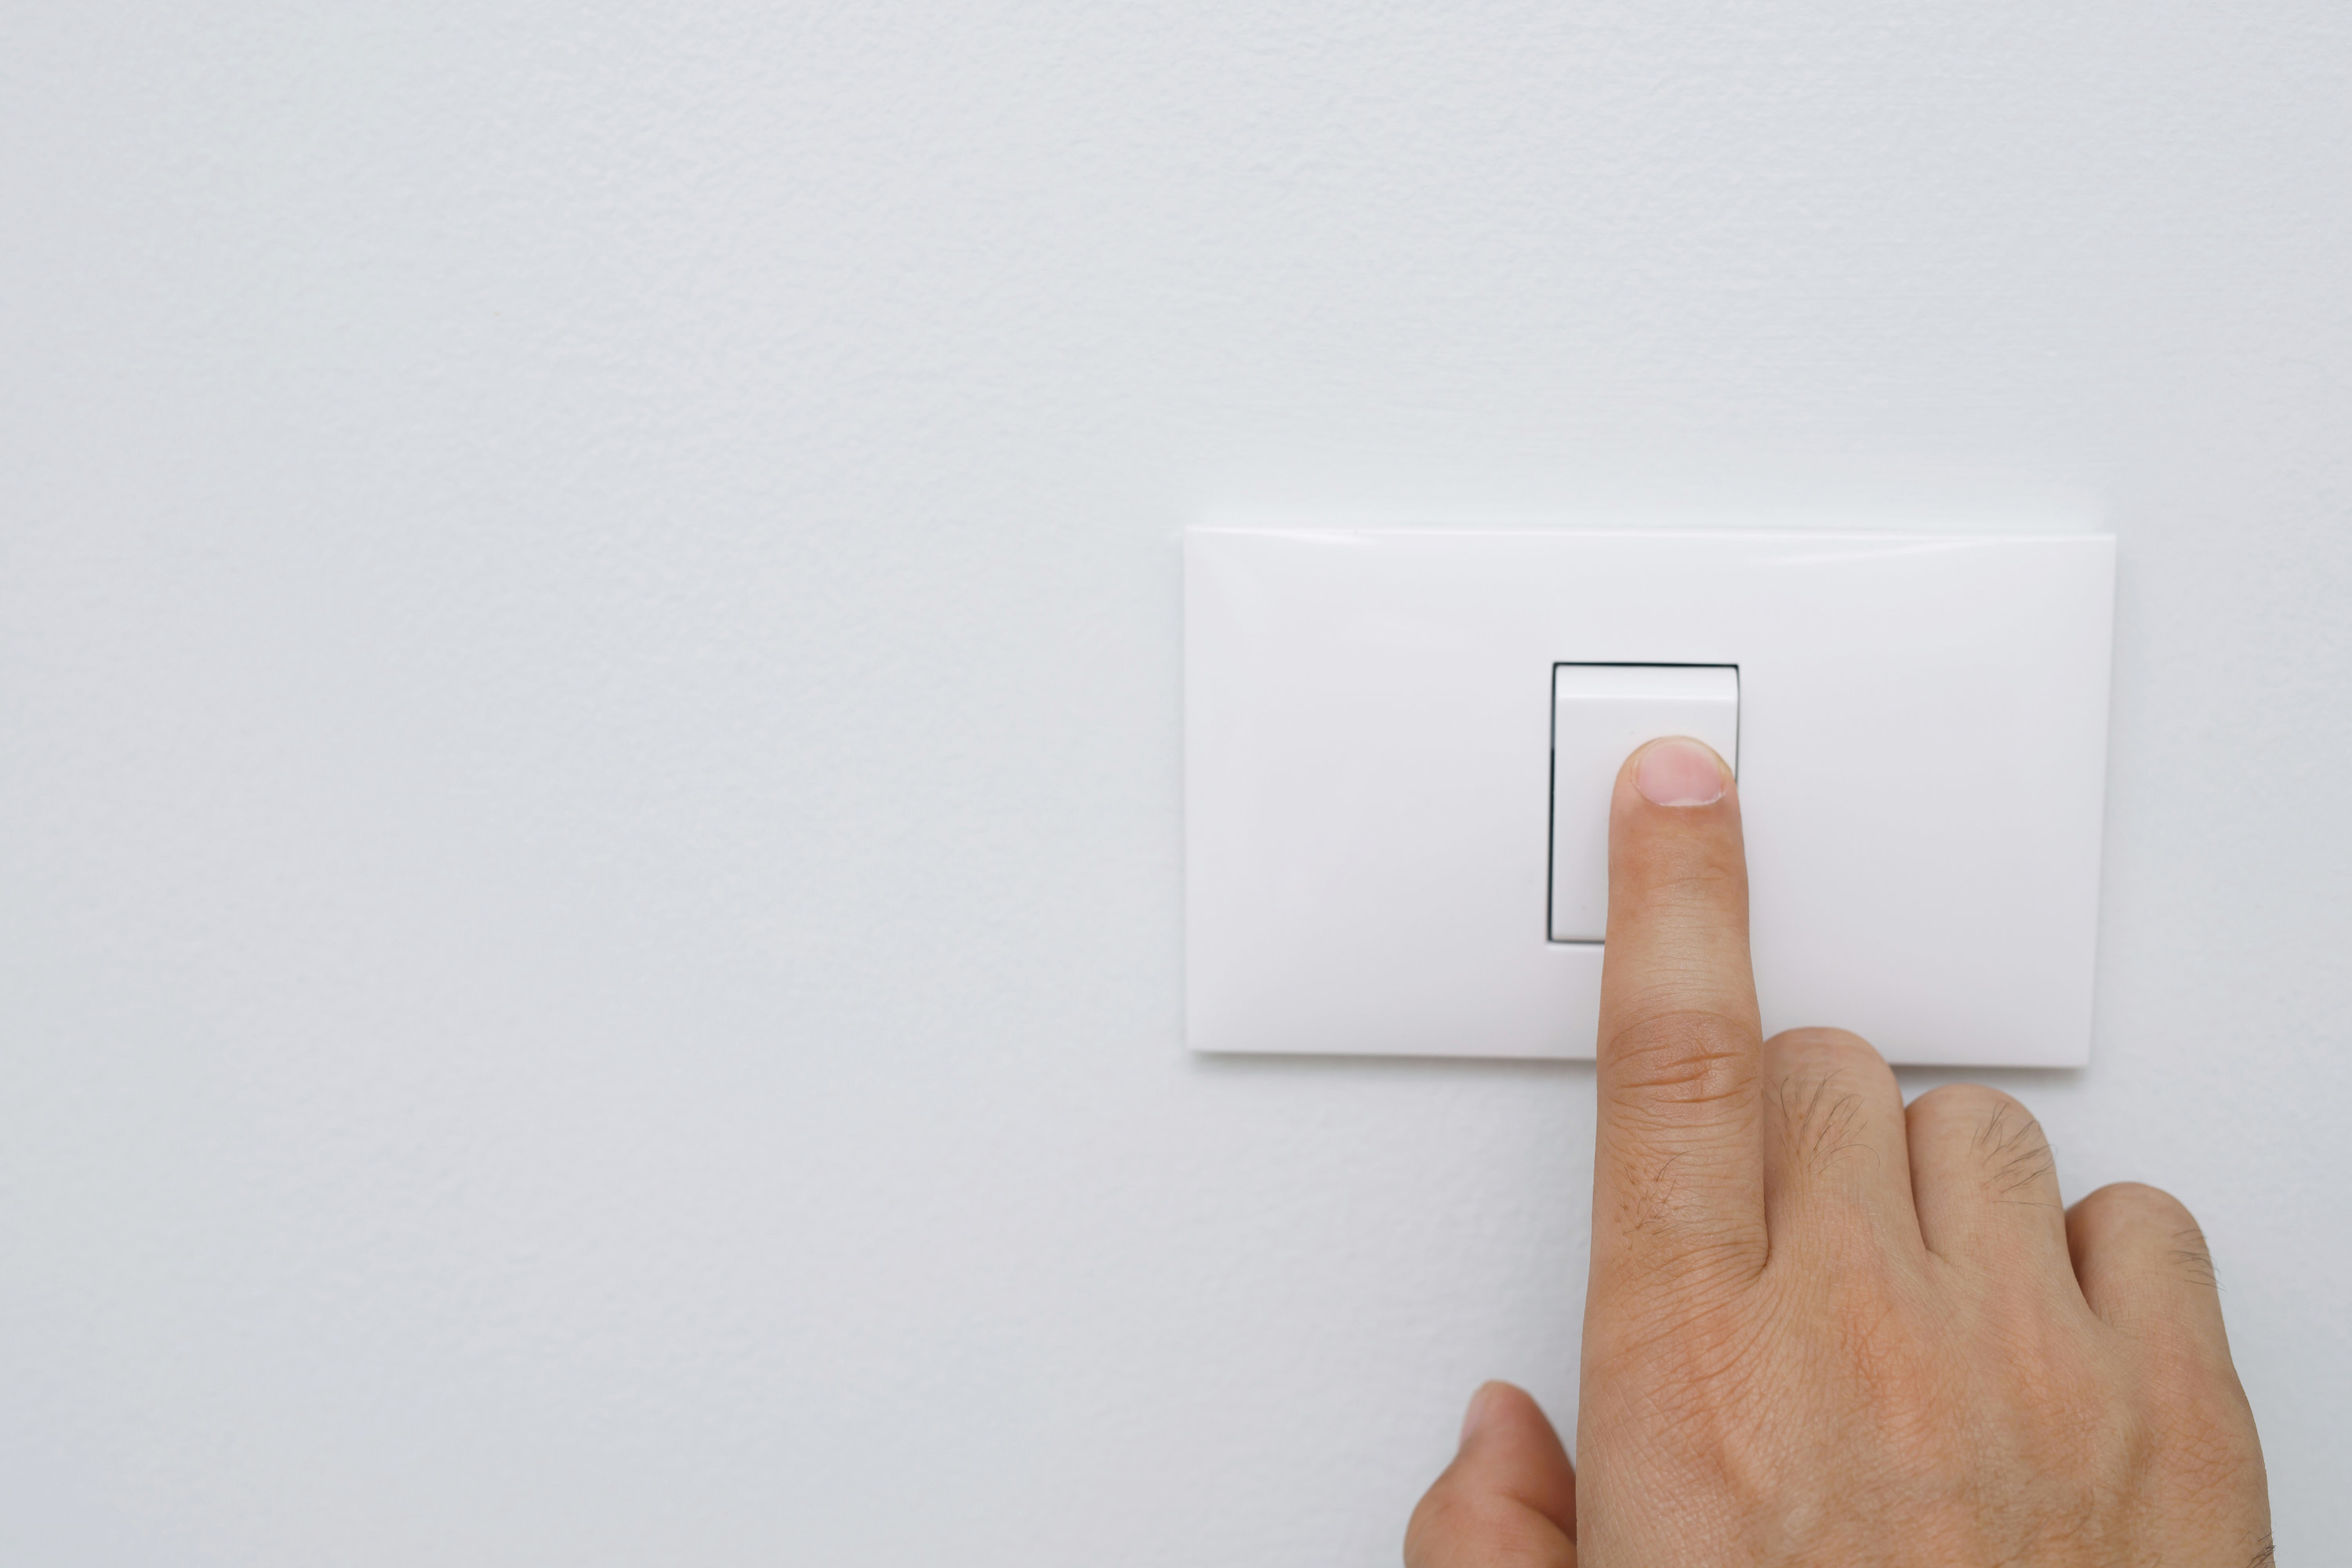 A hand flicking a light switch